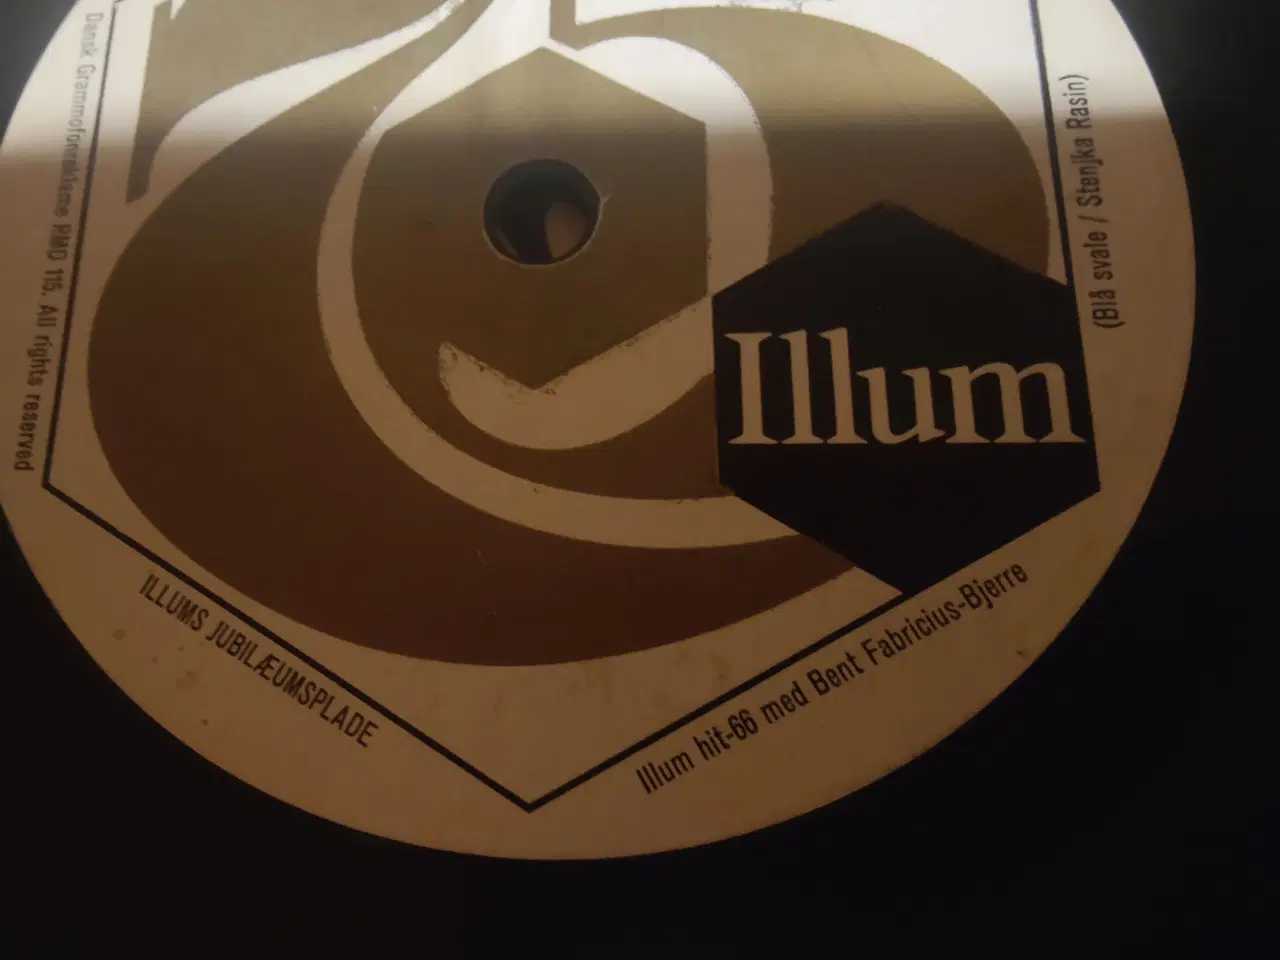 Billede 3 - Bent Fabricius Bjerre LP single Illum 25 års jubil